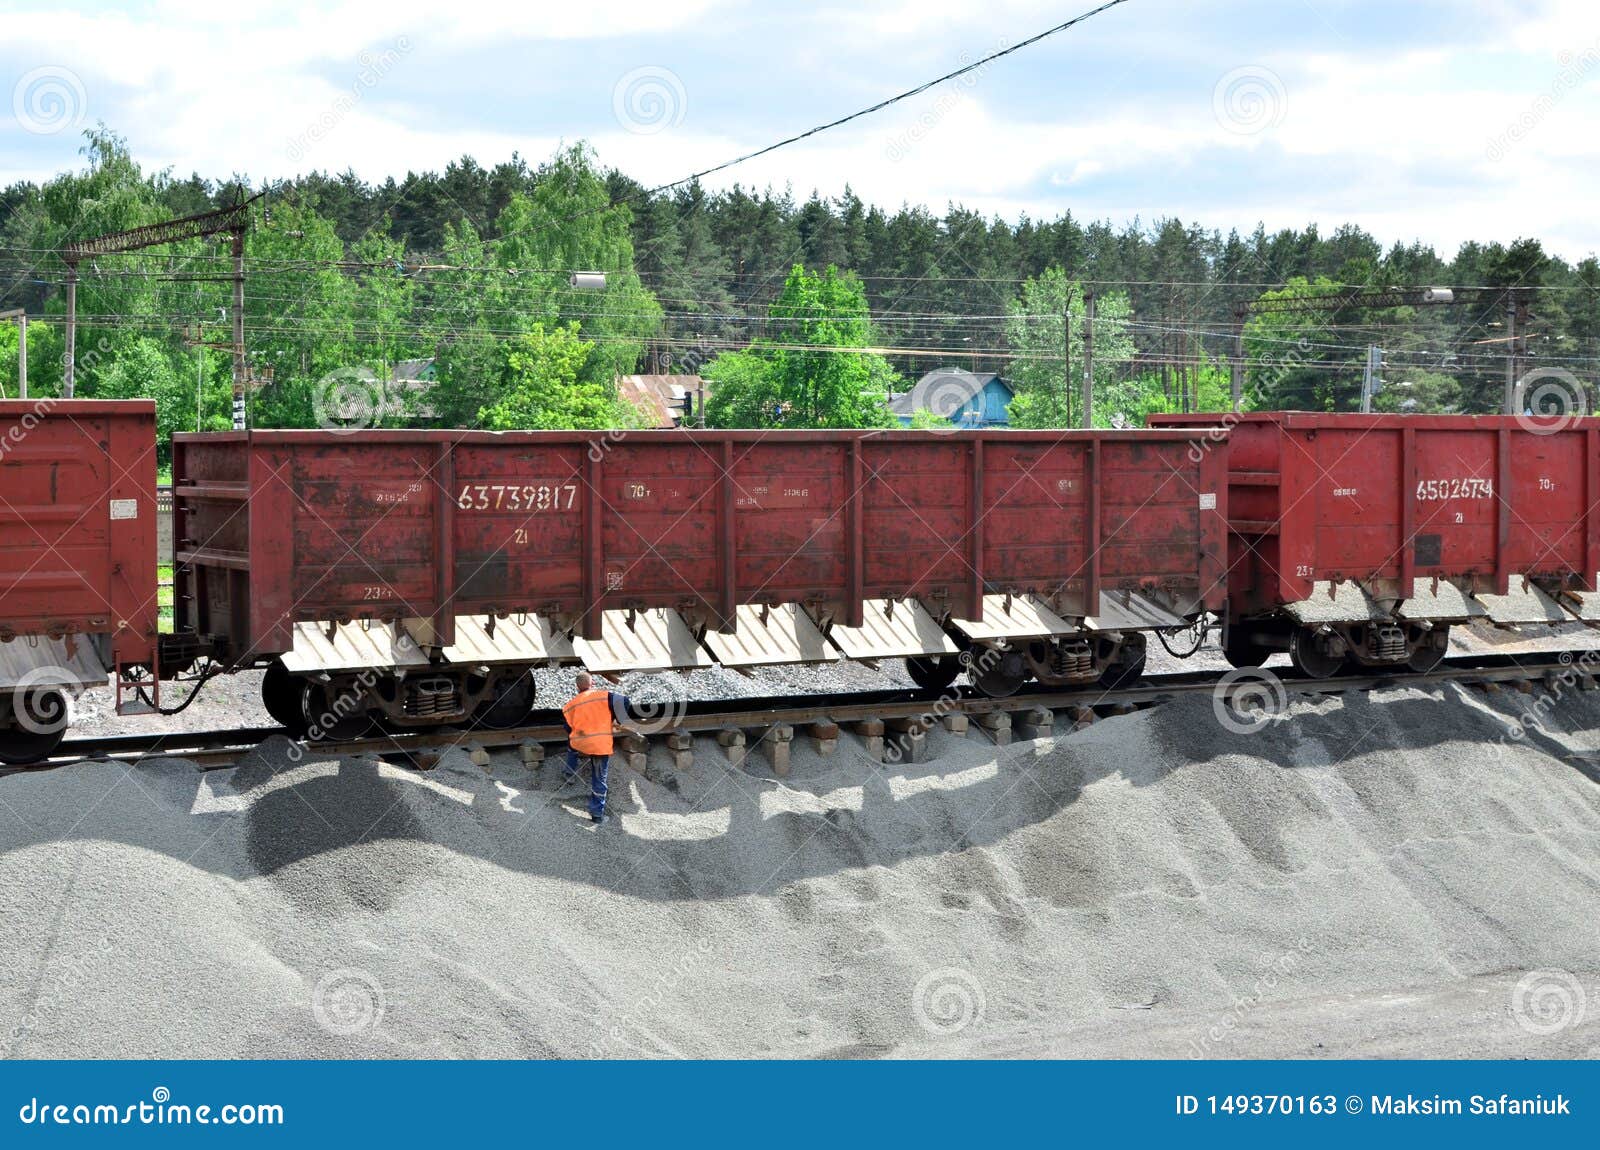 Railway workers adjusting train tracks - Stock Image 